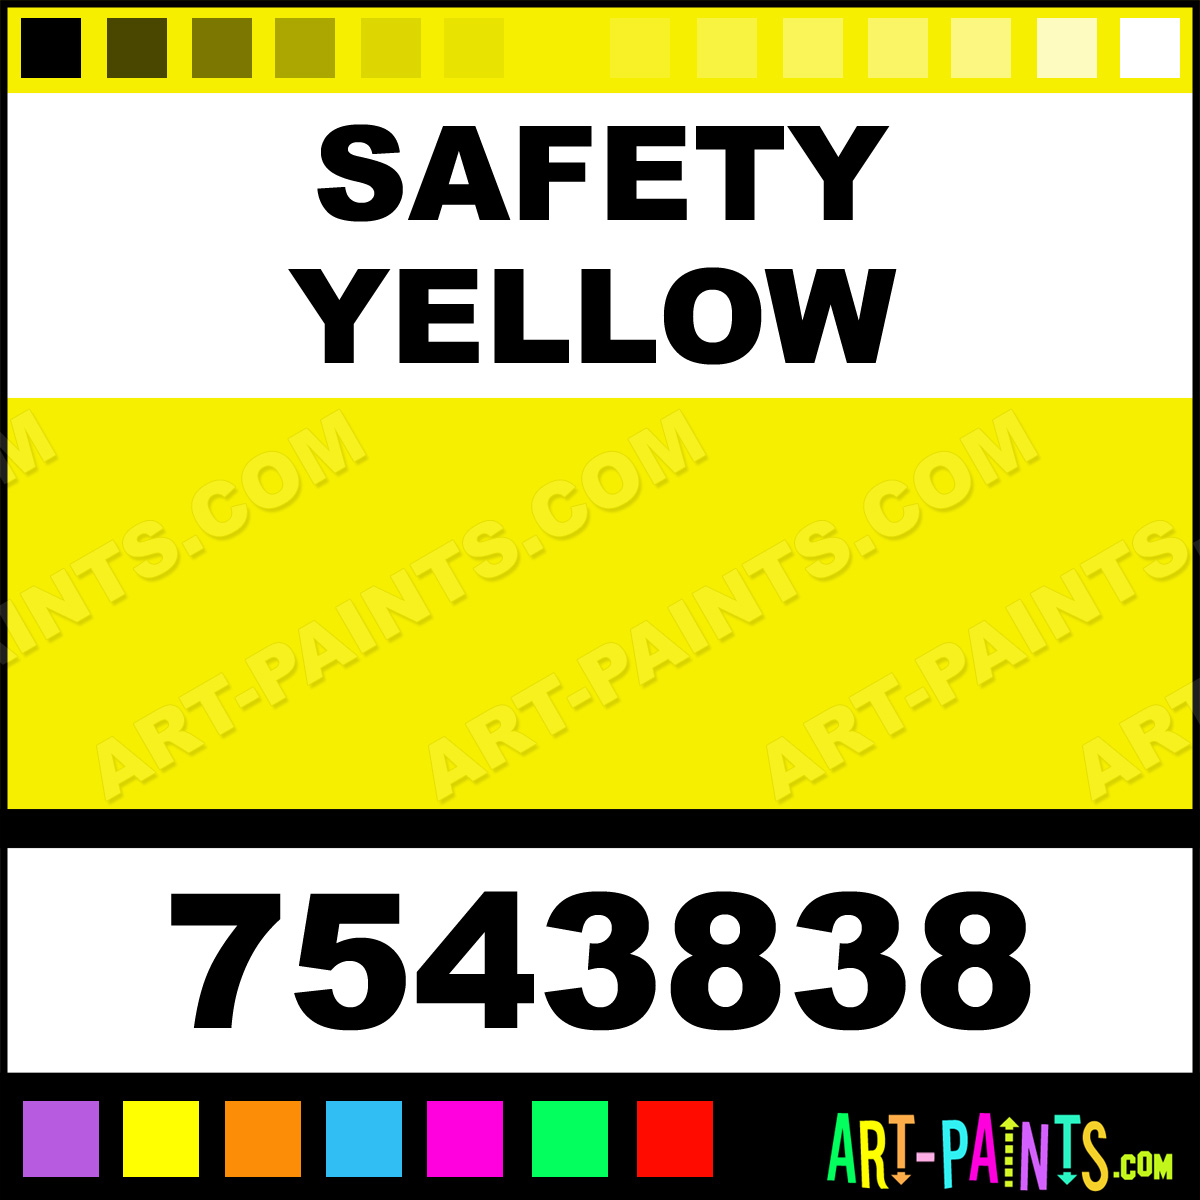 Safety Yellow lg